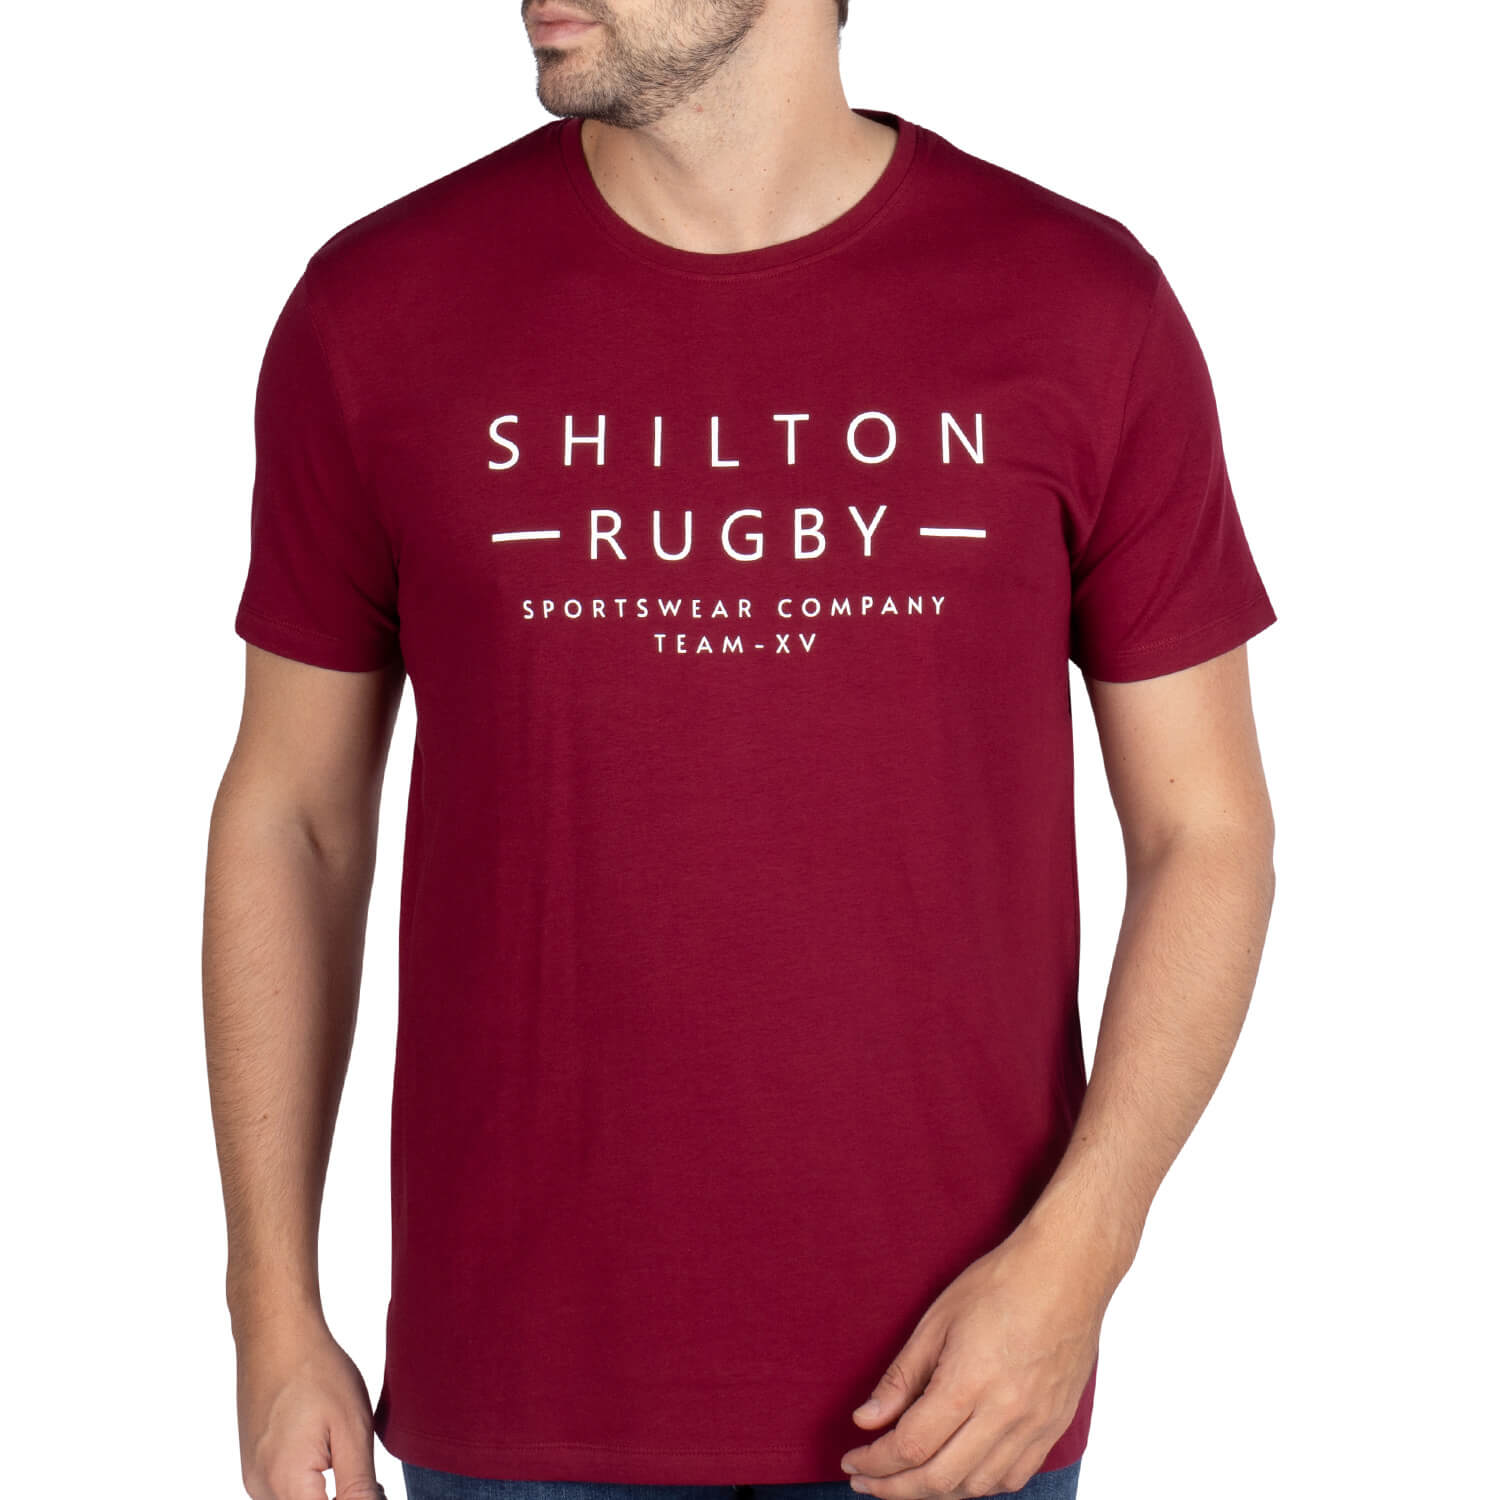 T-shirt rugby team XV Bordeaux - Shilton